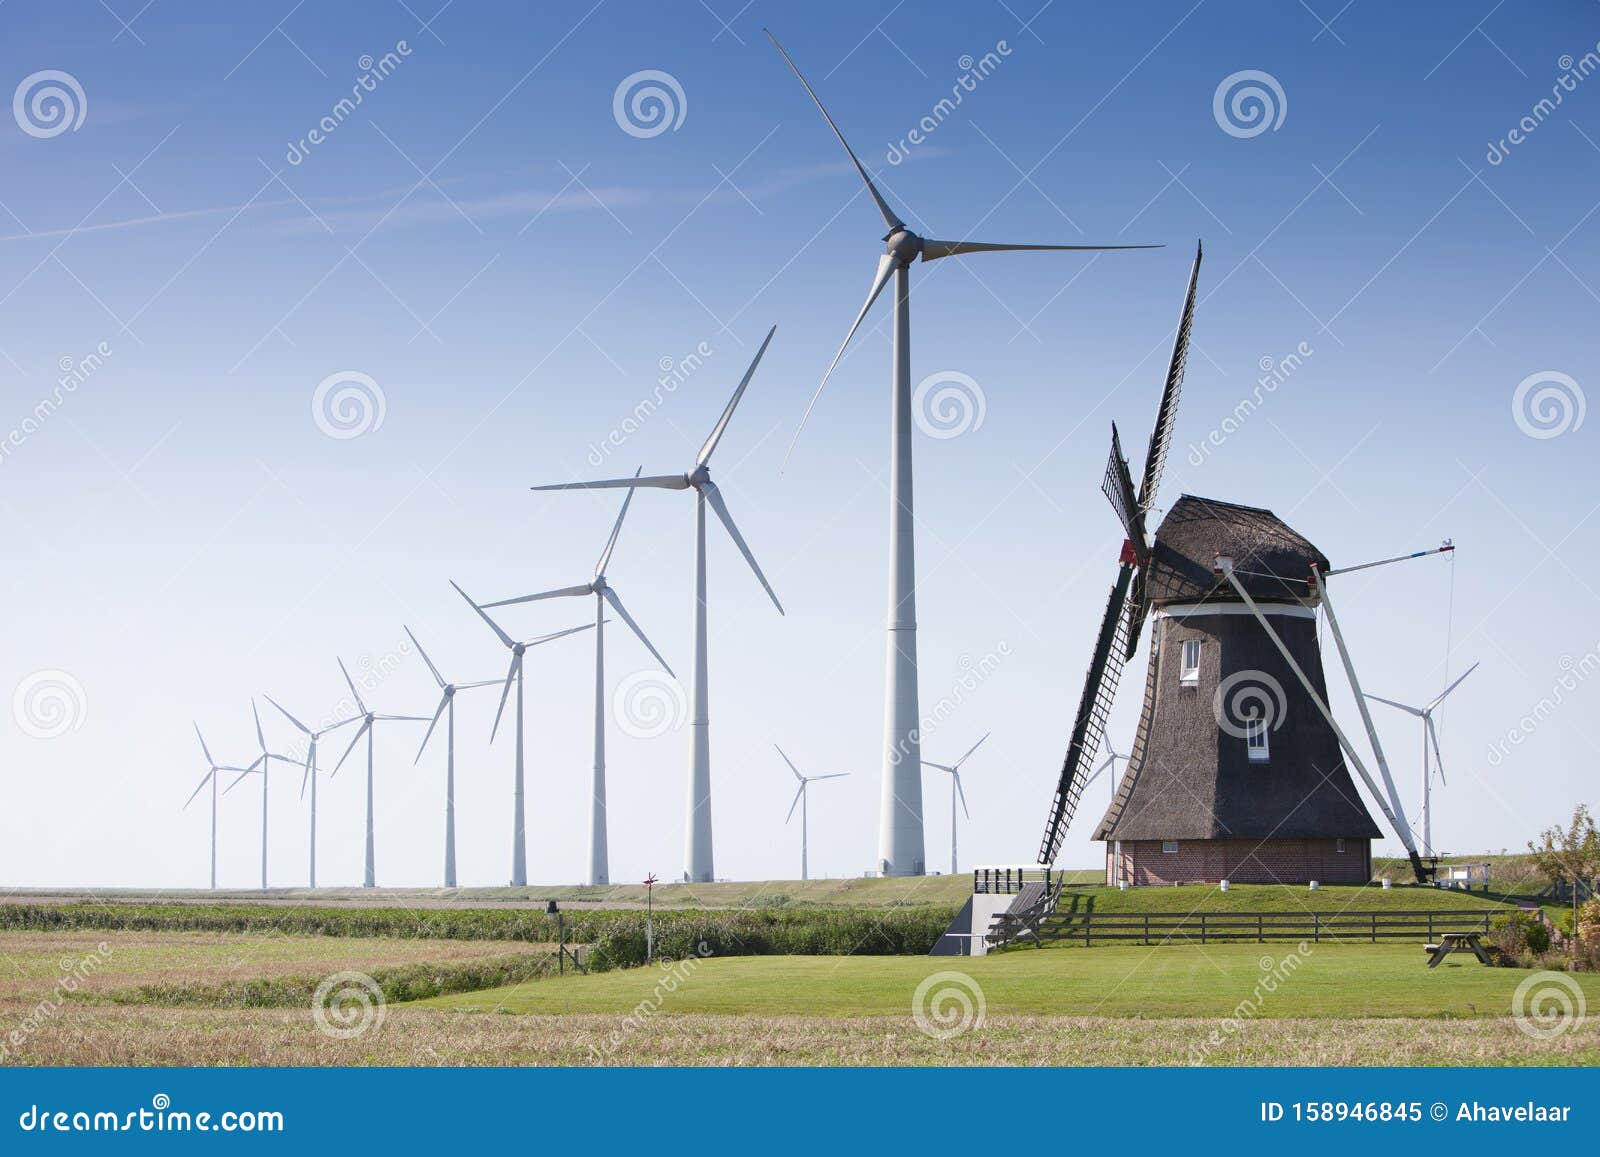 Old Dutch Windmill And Modern Wind Turbines Against Blue ...